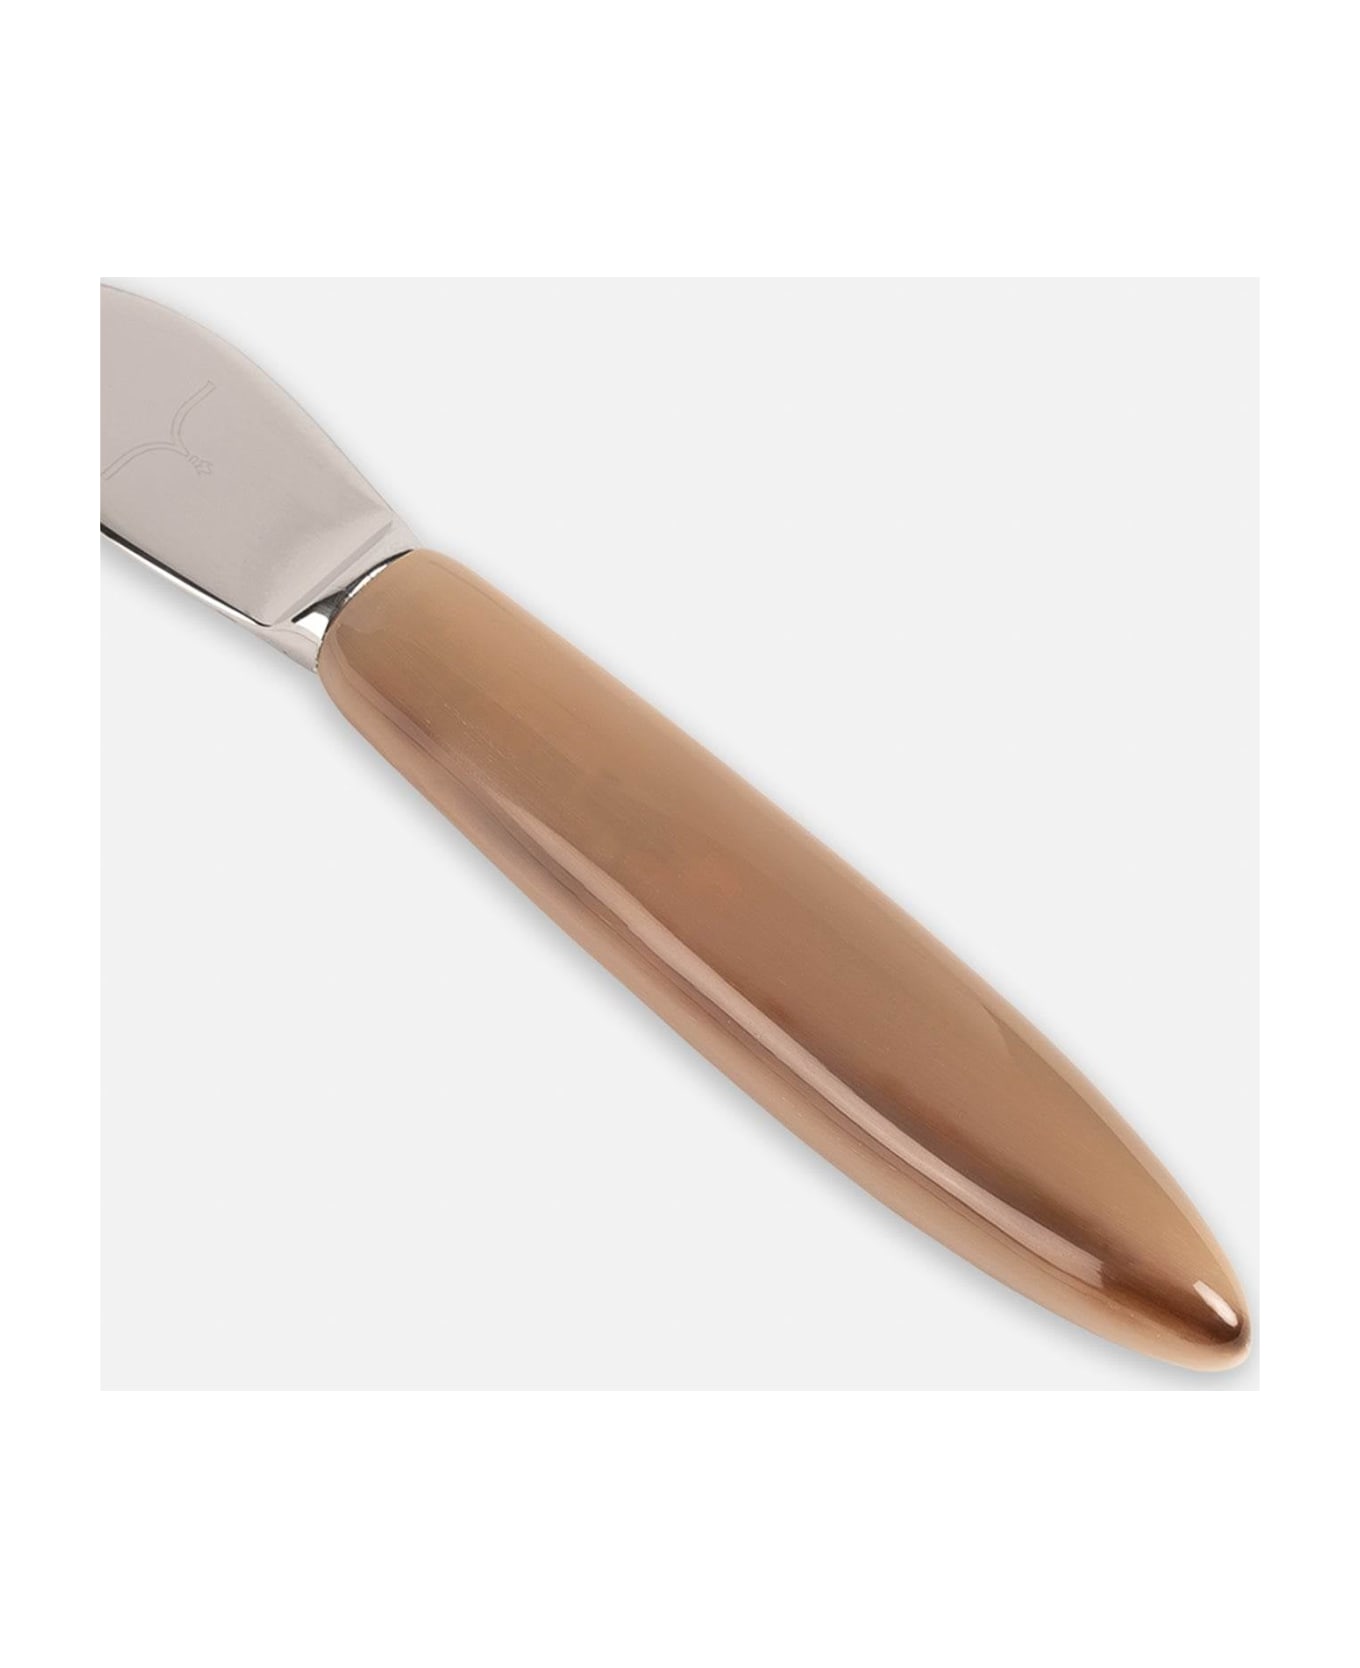 Larusmiani Parmesan Knife 'parma'  - Neutral